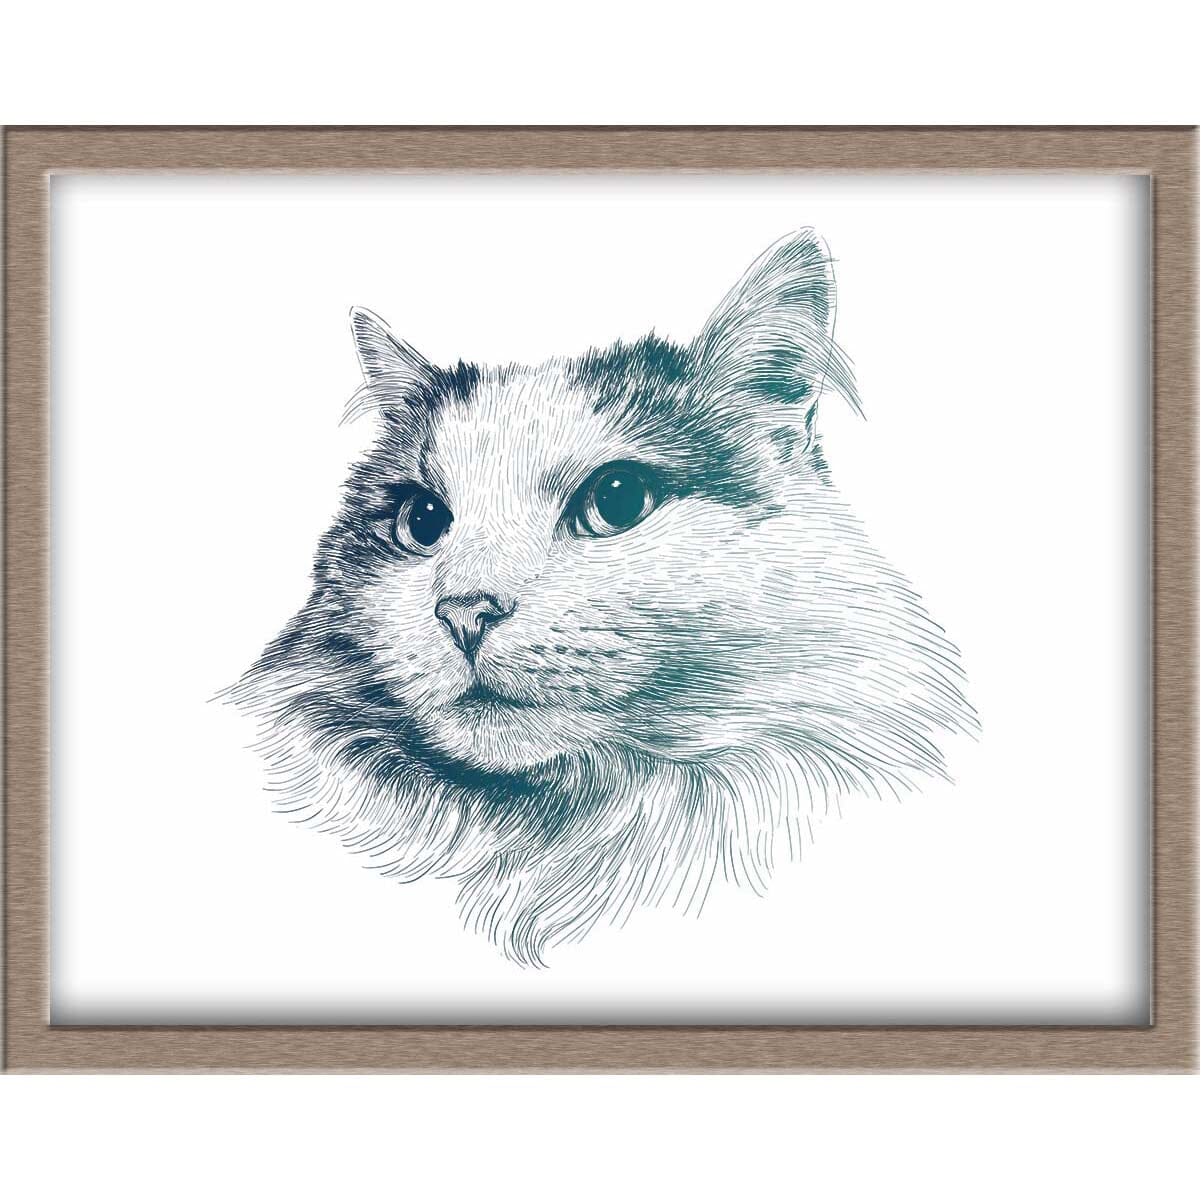 Majestic Cat Foiled Print (Murphy) Posters, Prints, & Visual Artwork JoyousJoyfulJoyness 